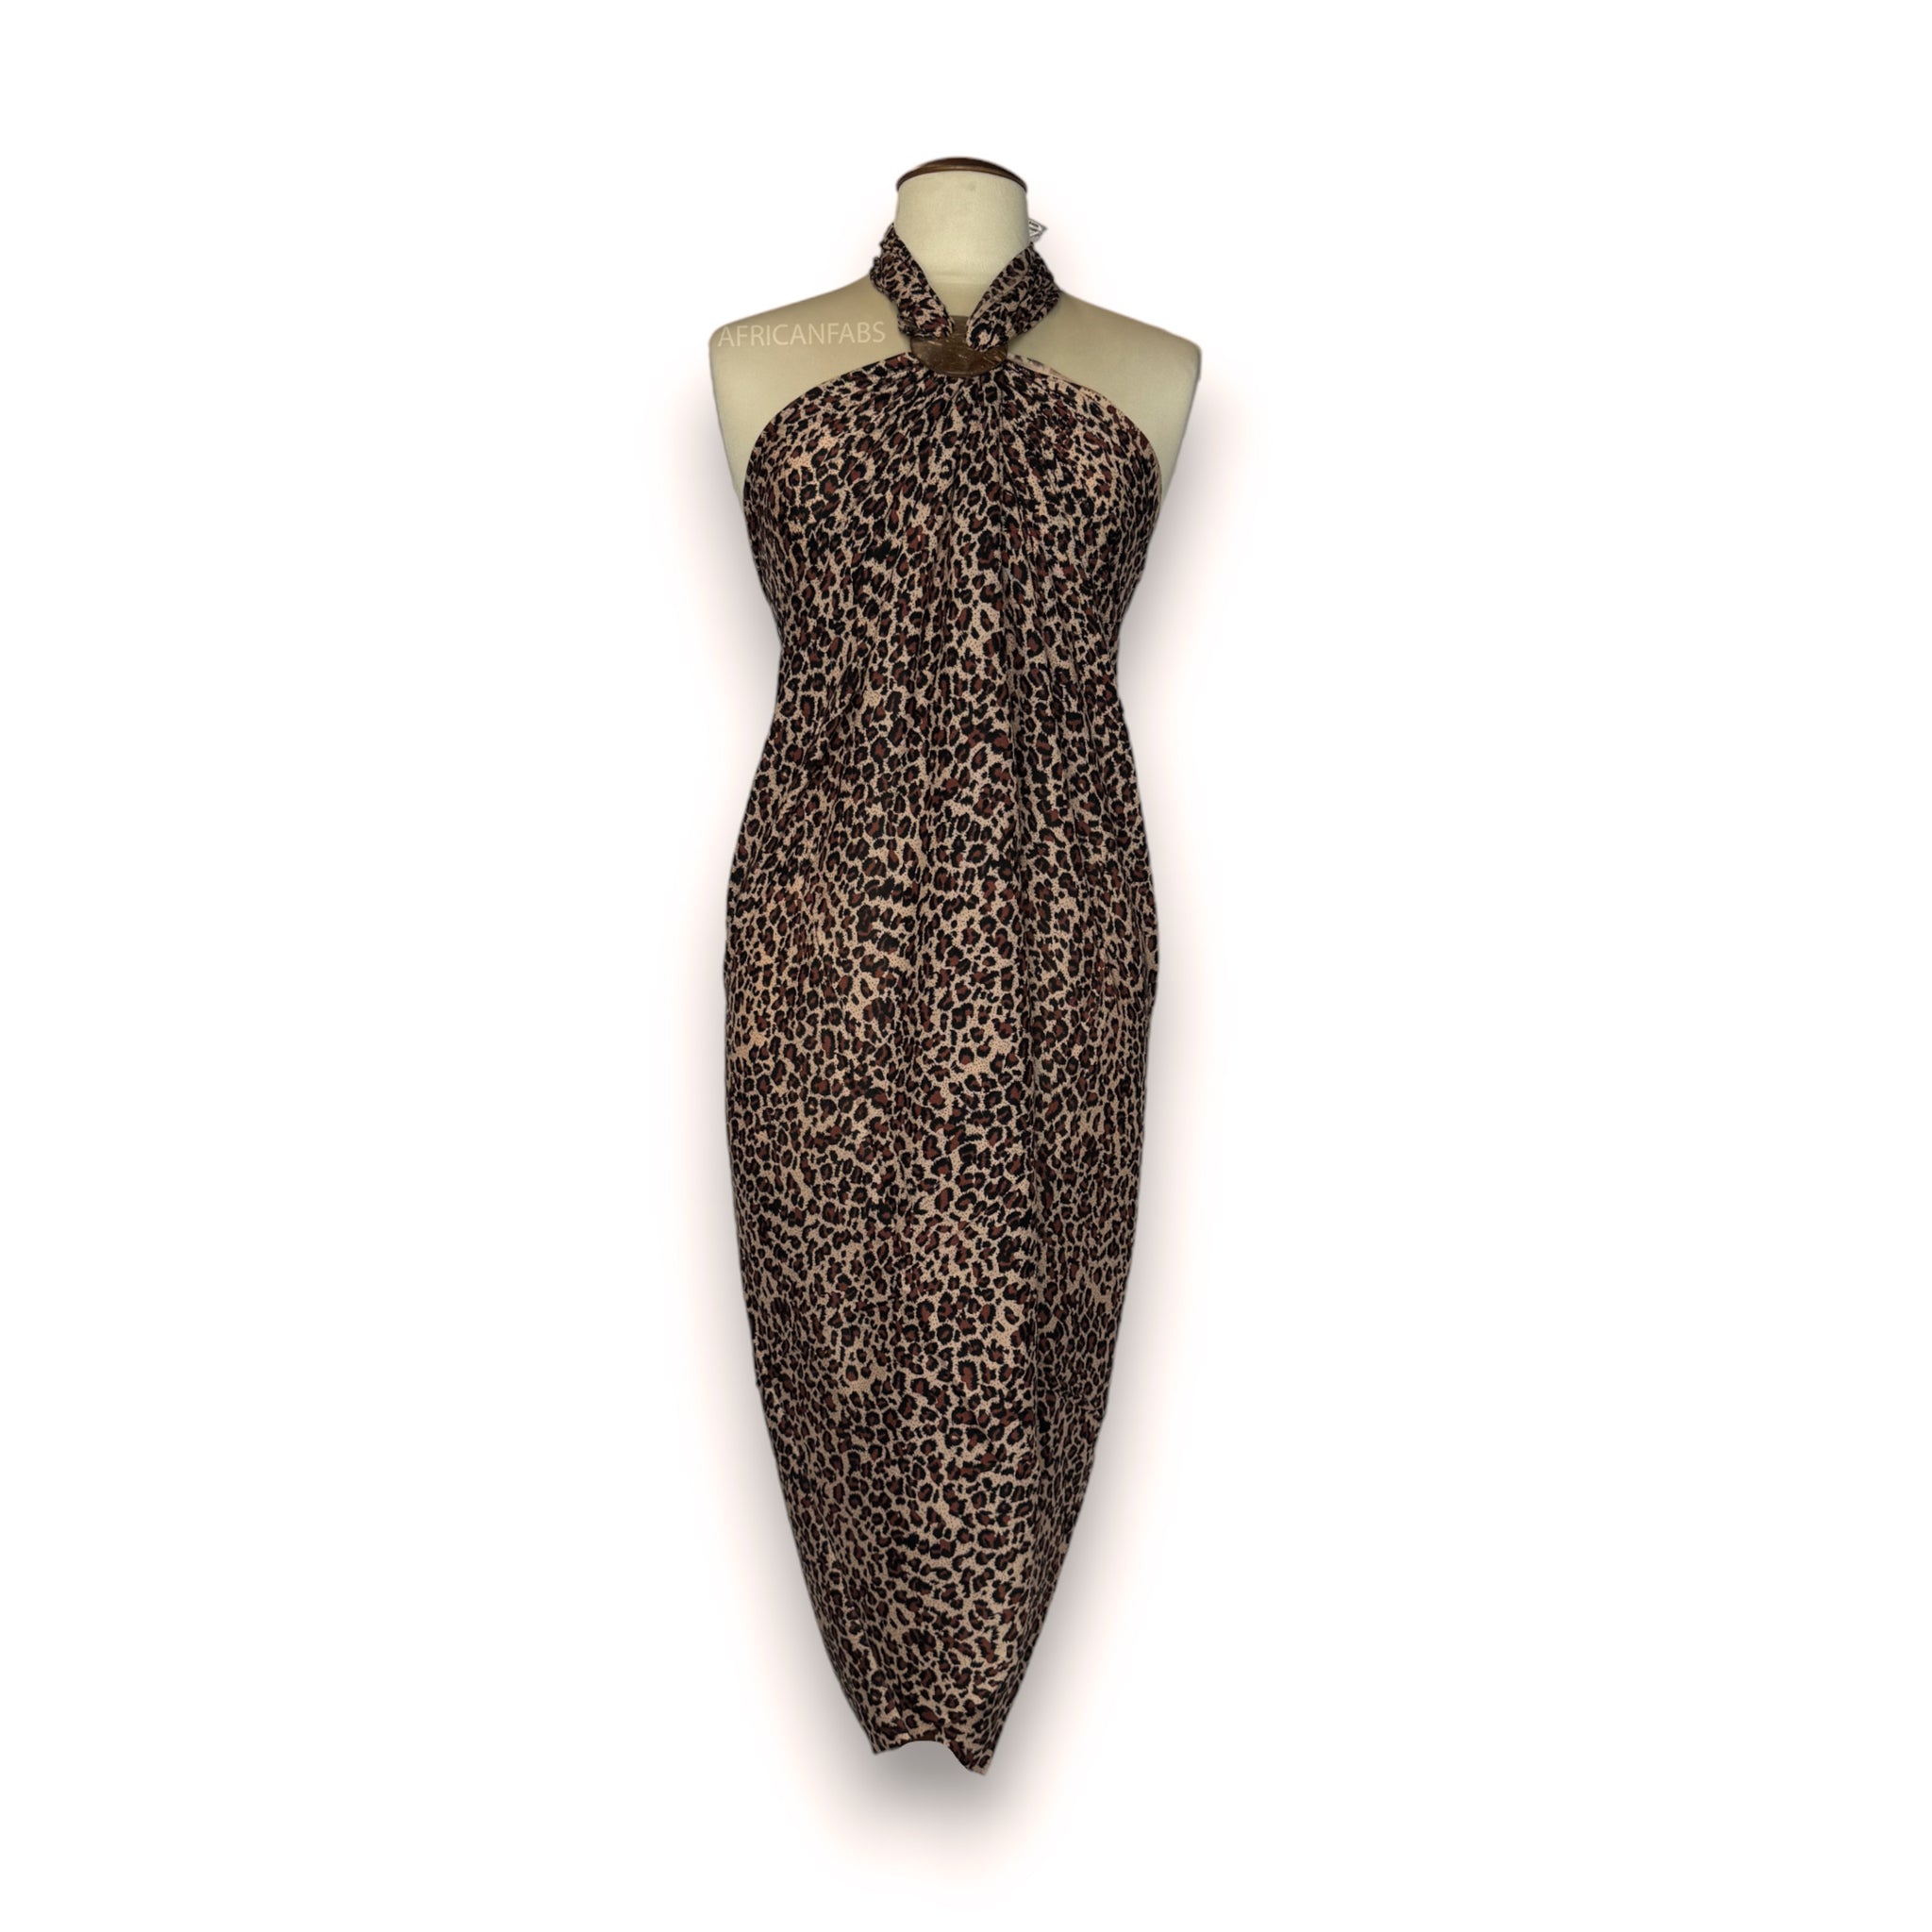 Sarong / pareo - Beachwear wrap skirt - Leopard